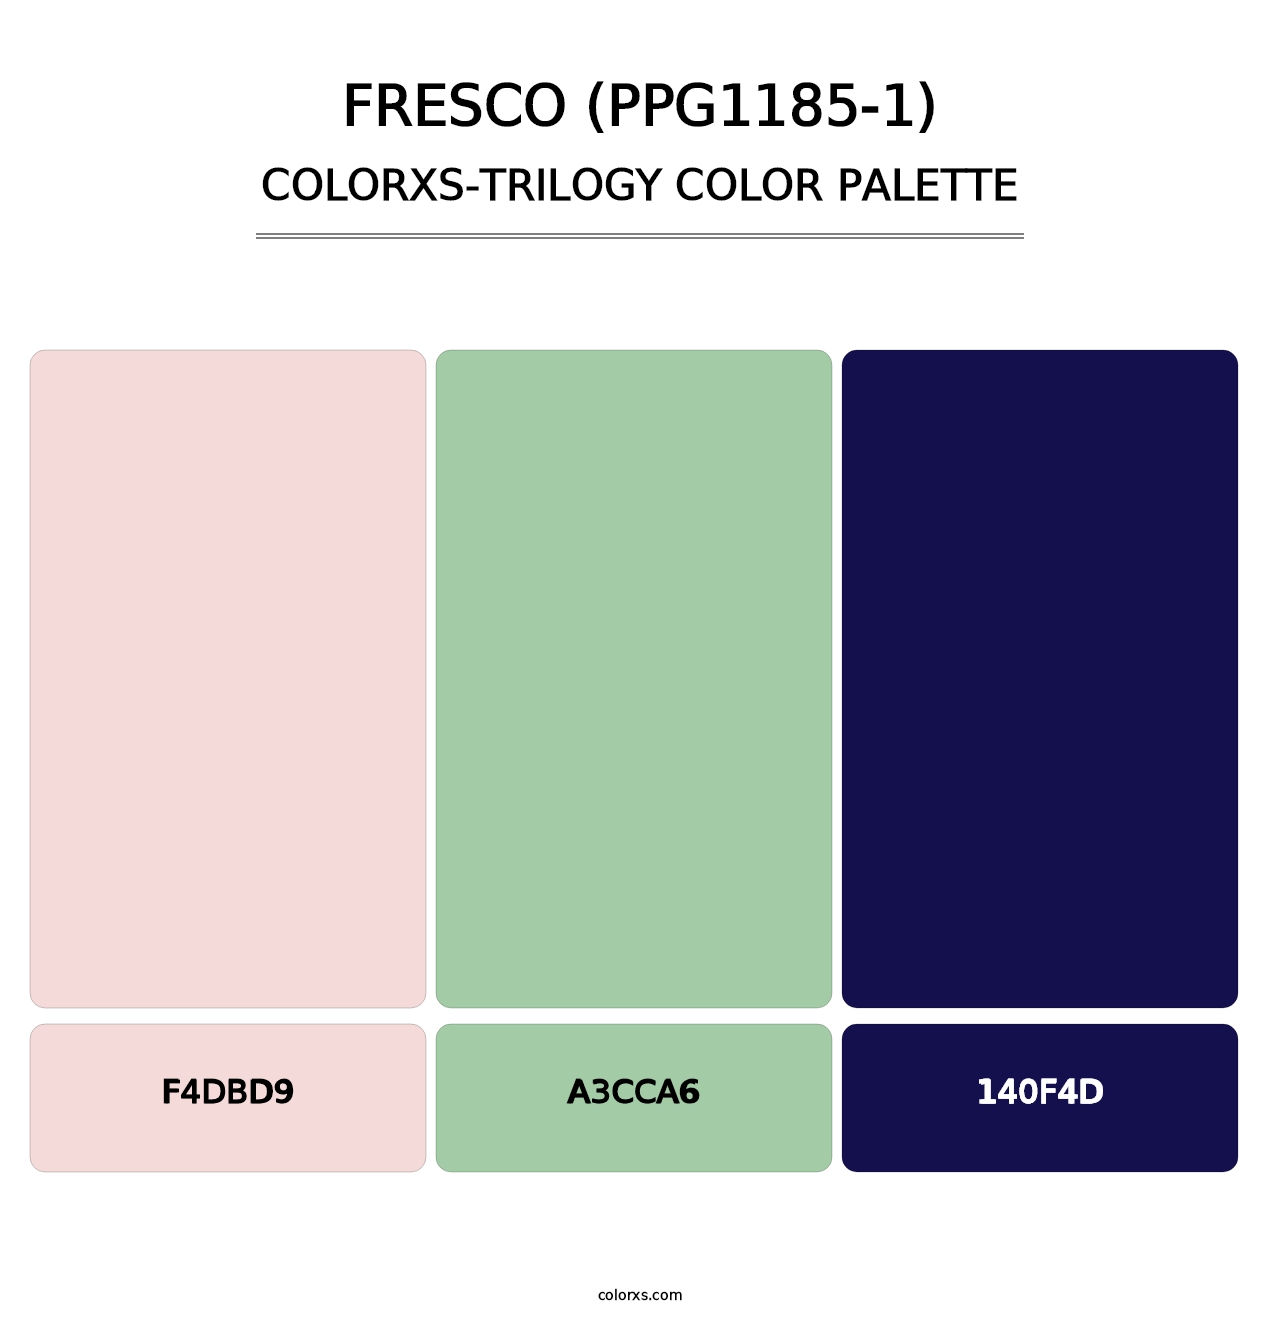 Fresco (PPG1185-1) - Colorxs Trilogy Palette